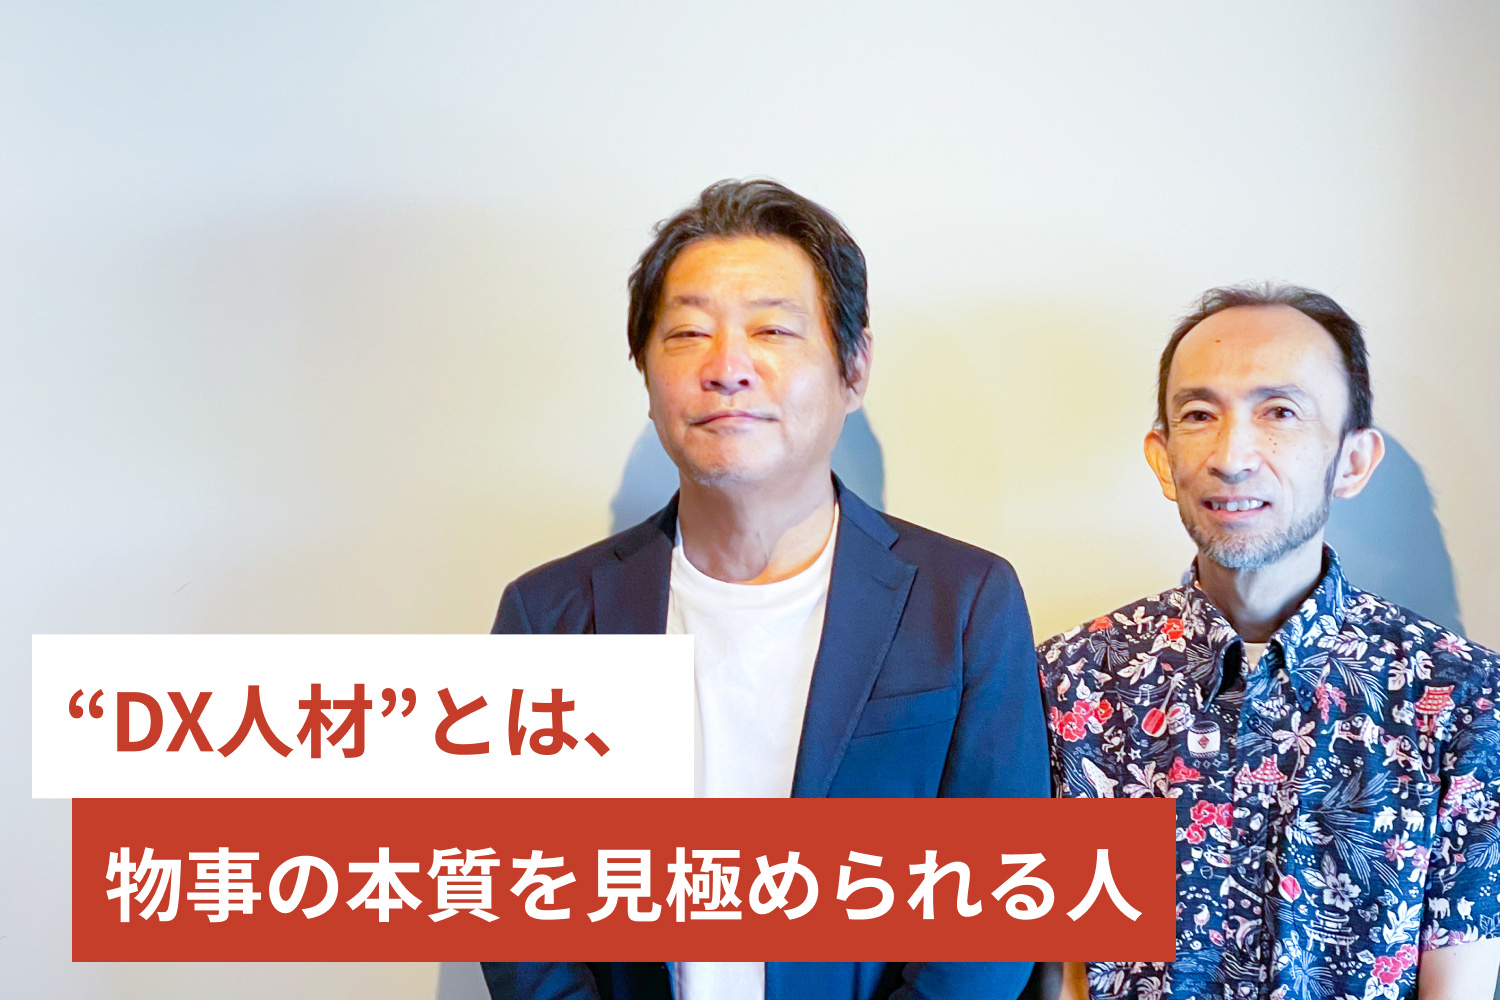 「ResorTech Okinawa」で地域DX人材育成など弊社の取組を詳しくご紹介頂きました